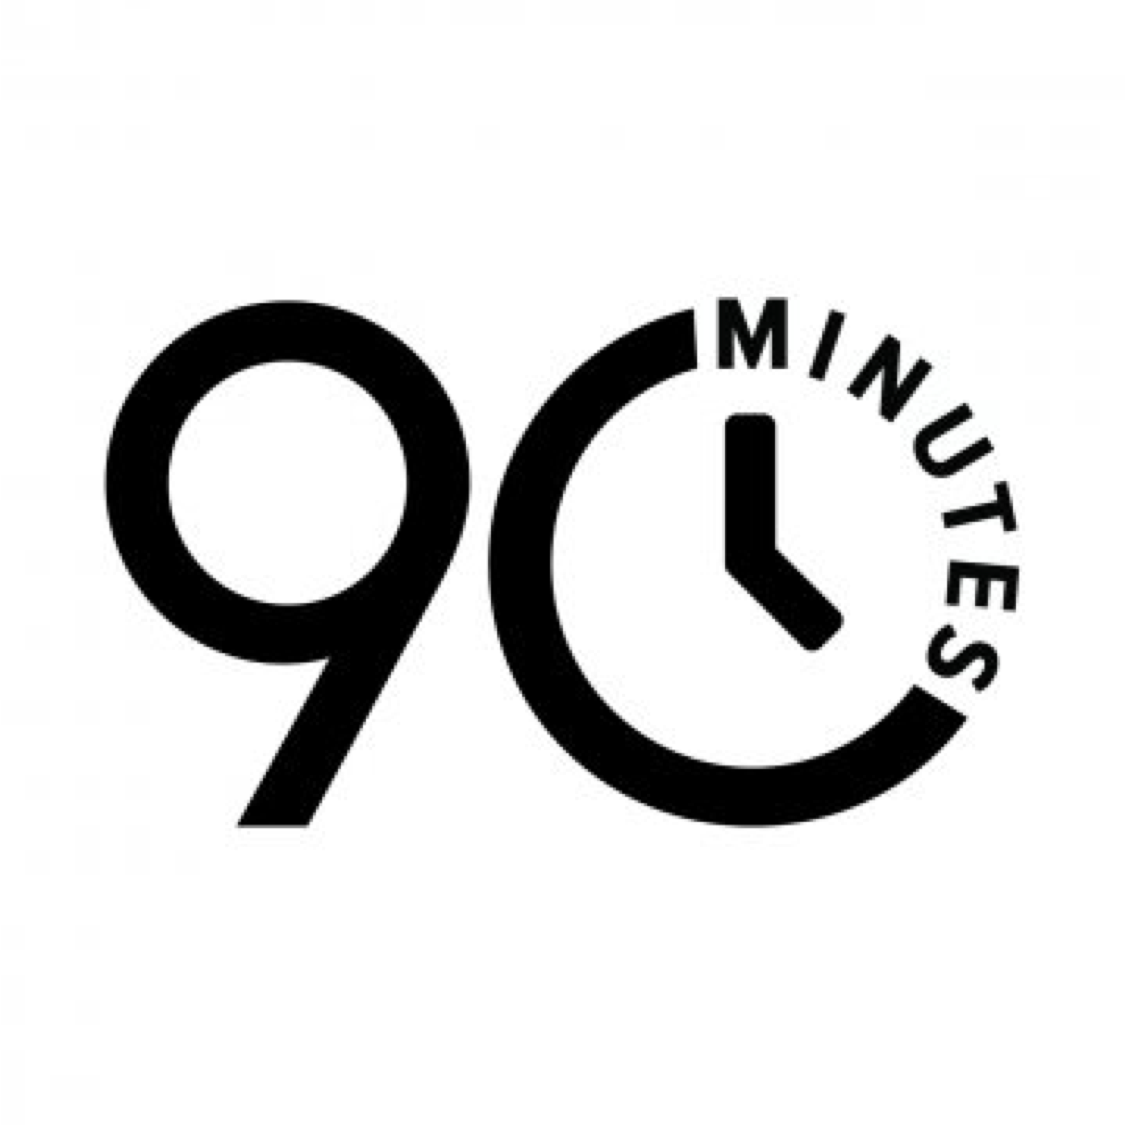 6 часов 90 минут. 90 Минут. 90 Минут иконка. Таймер 90 минут. Значки 90.